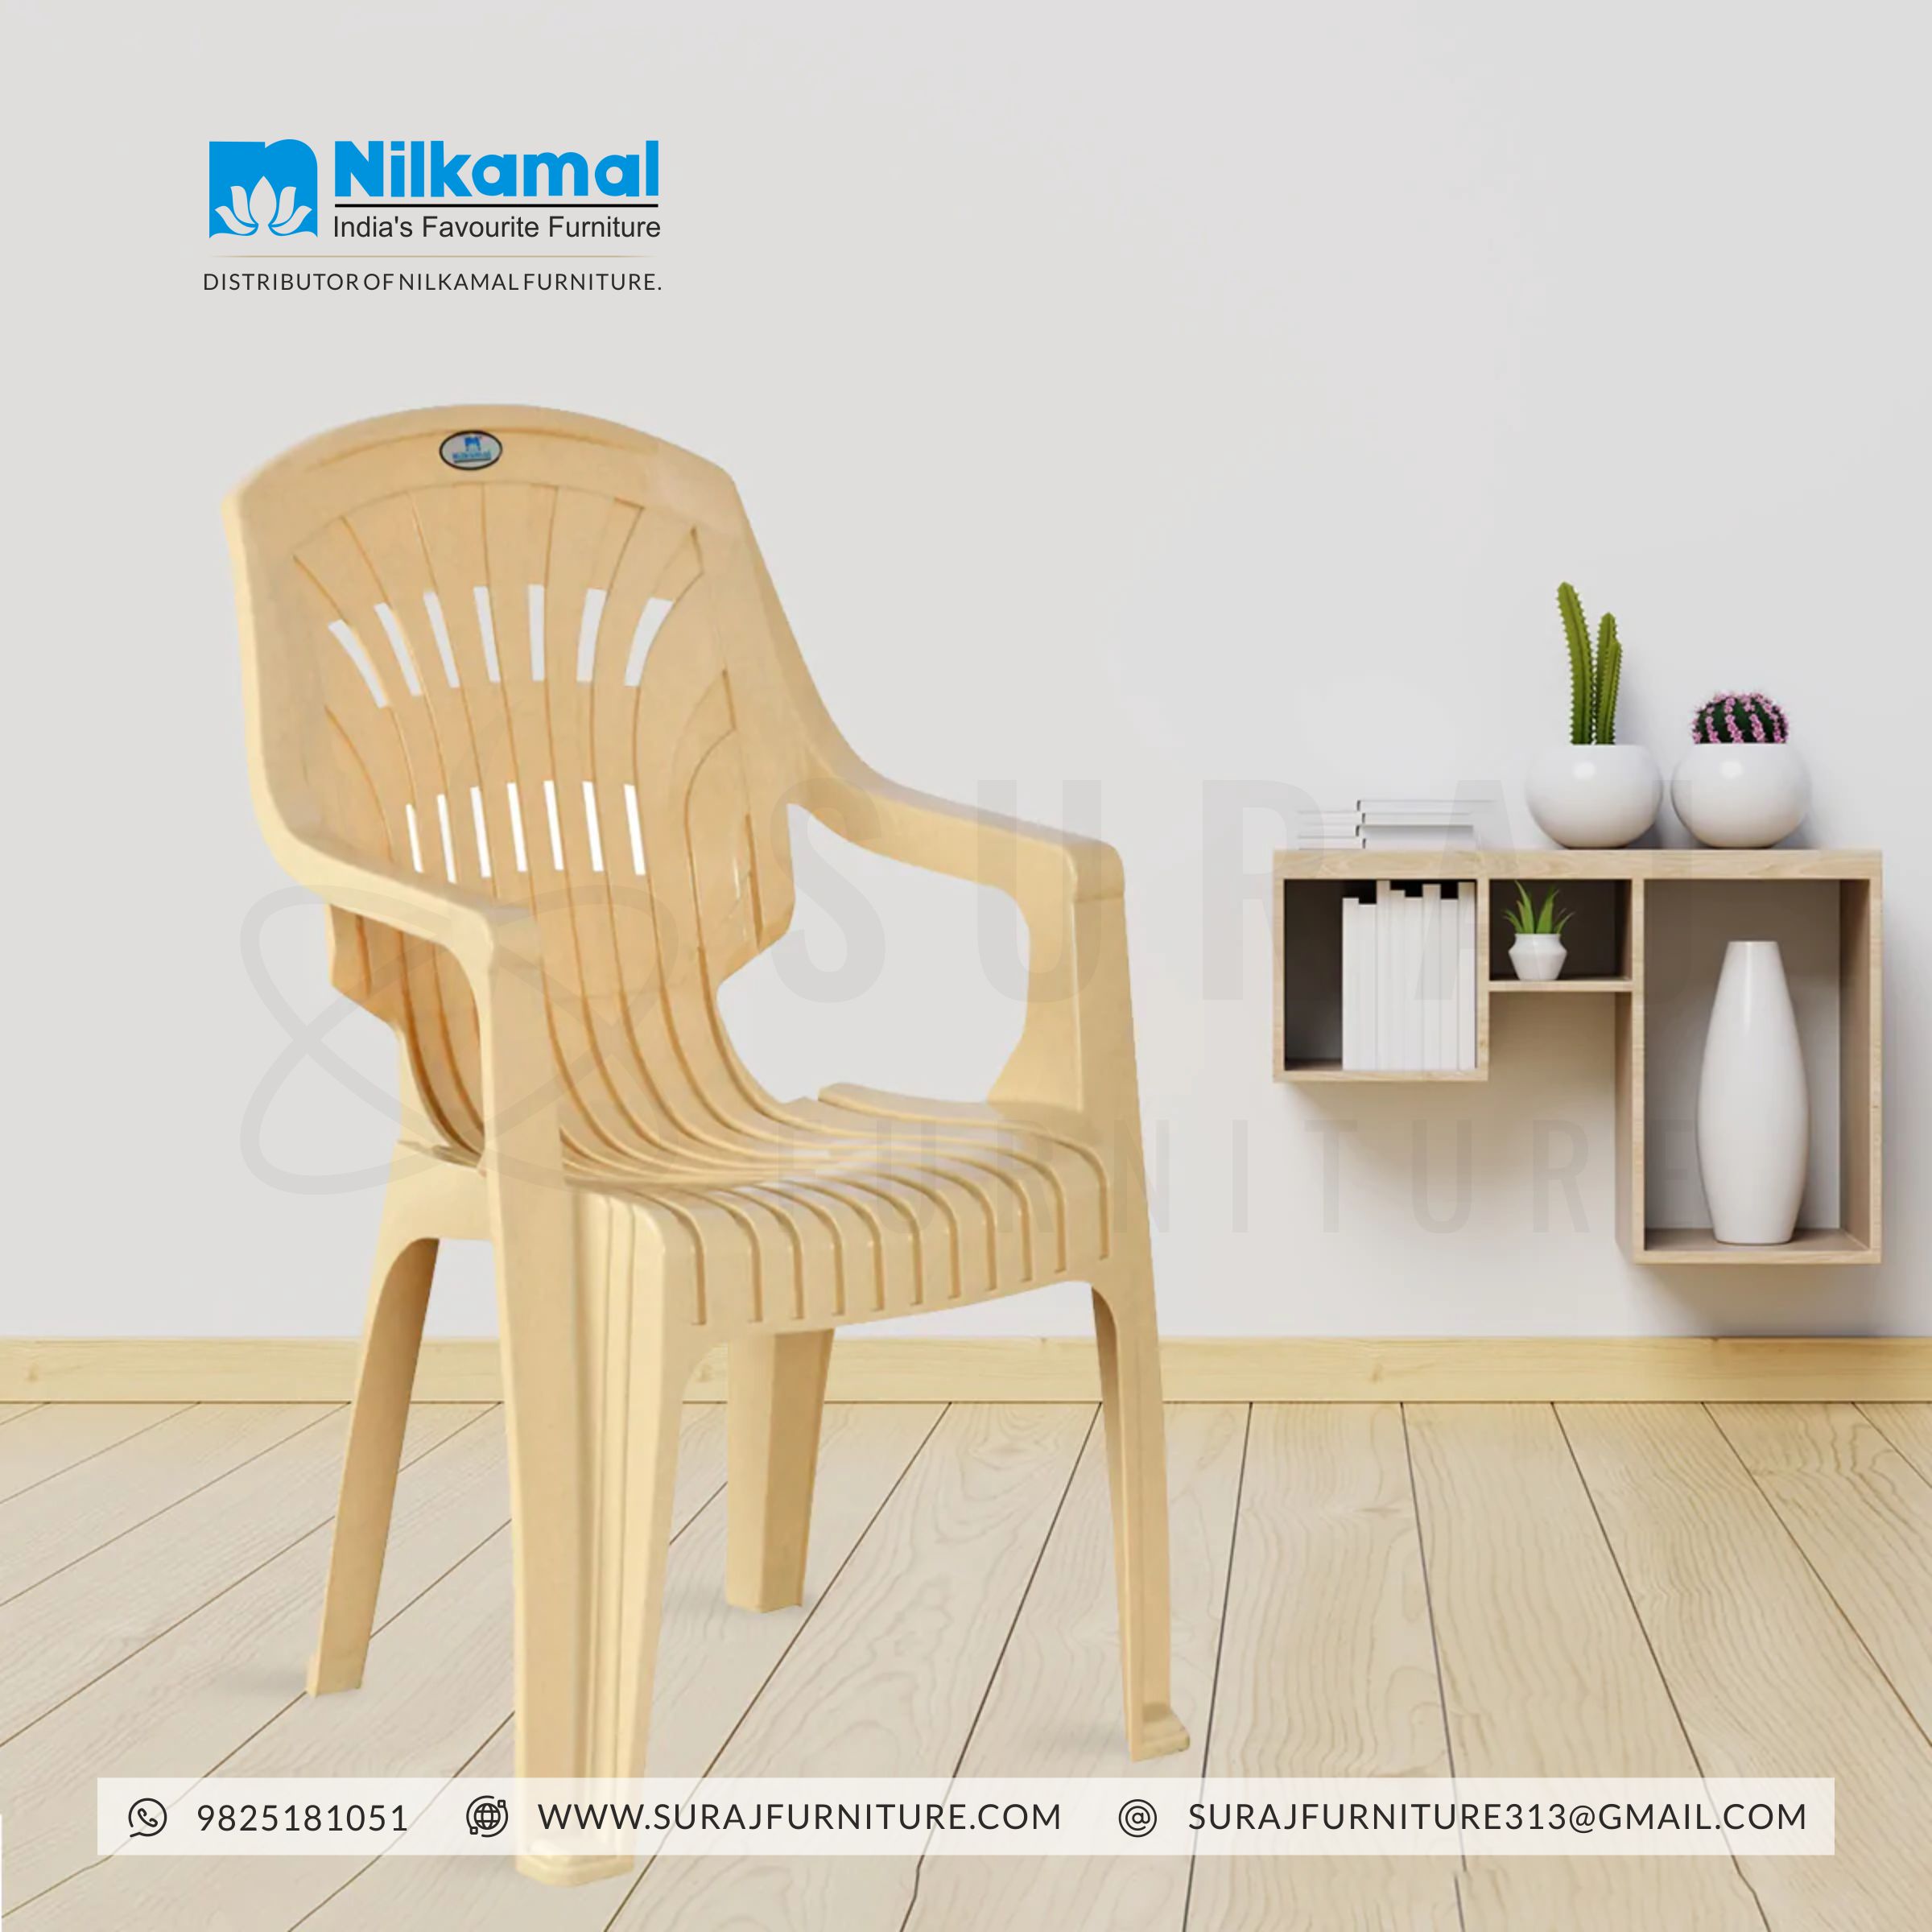 nilkamal furniture located near